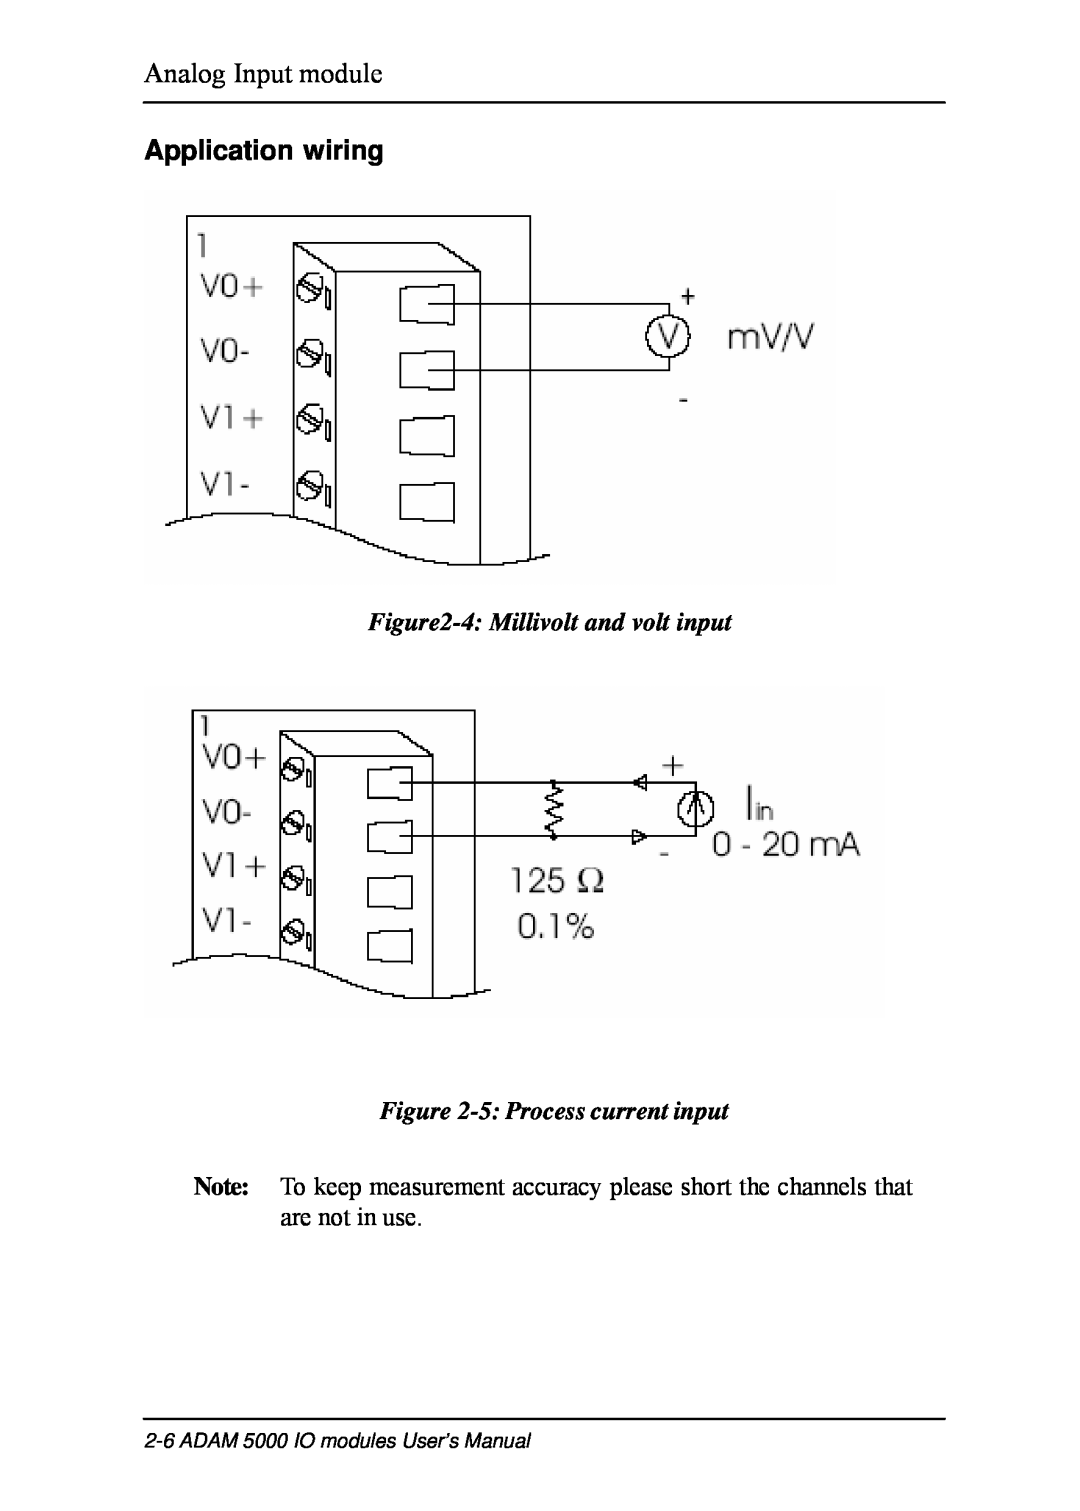 B&B Electronics 5000 Series Application wiring, 4 Millivolt and volt input -5 Process current input, Analog Input module 